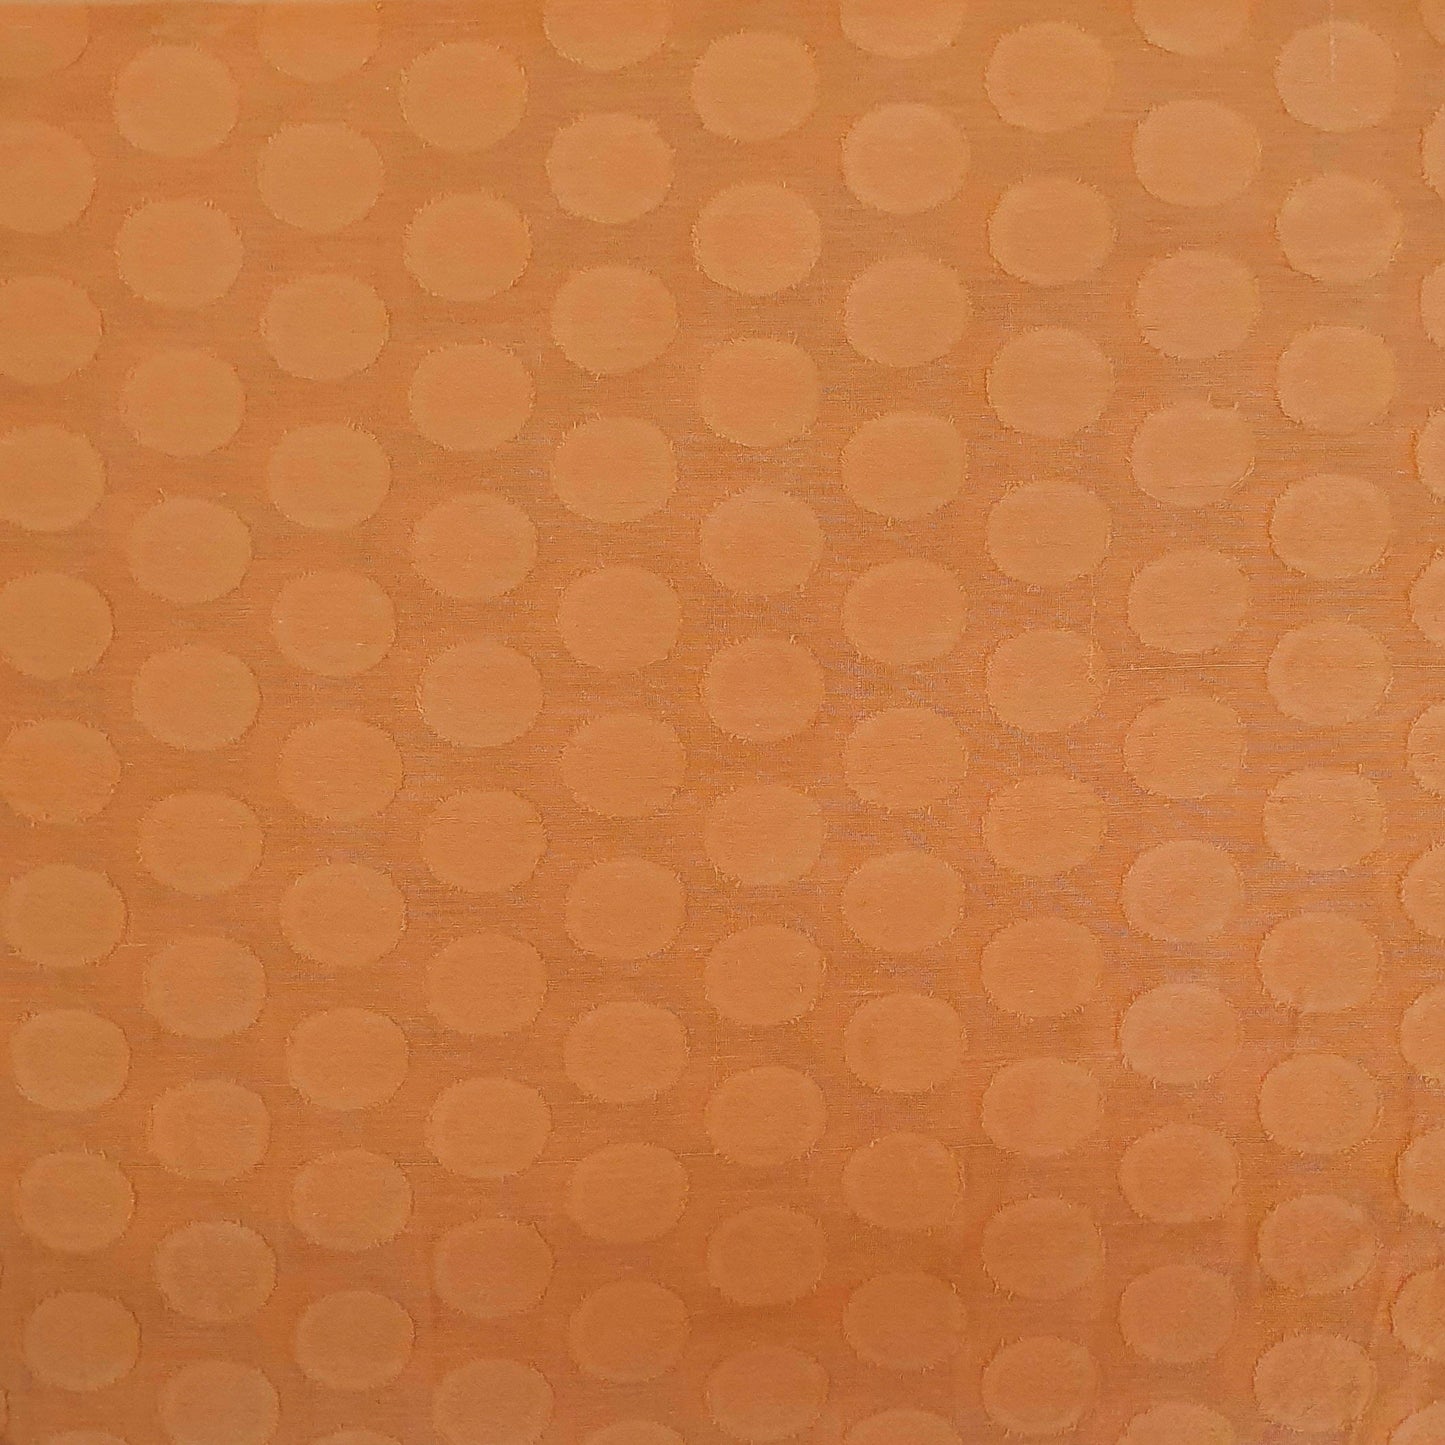 Orange Solid Jacquard Cotton Fabric, 48 Inches Plain Weave, TU-1967